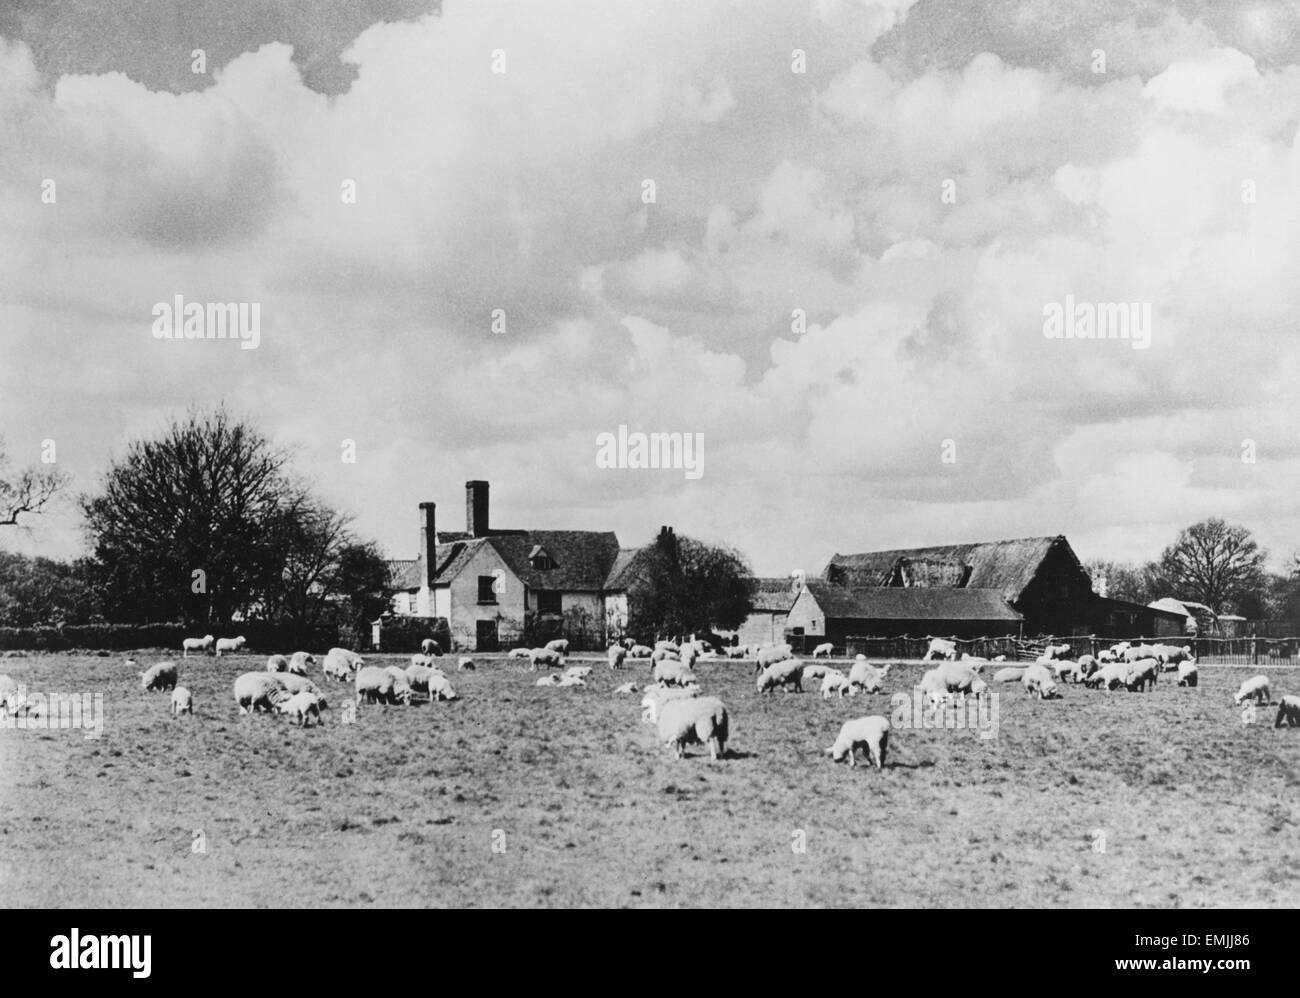 Ovejas y granja, Stoke-by-Nayland, Suffolk, Inglaterra, 1935 Foto de stock